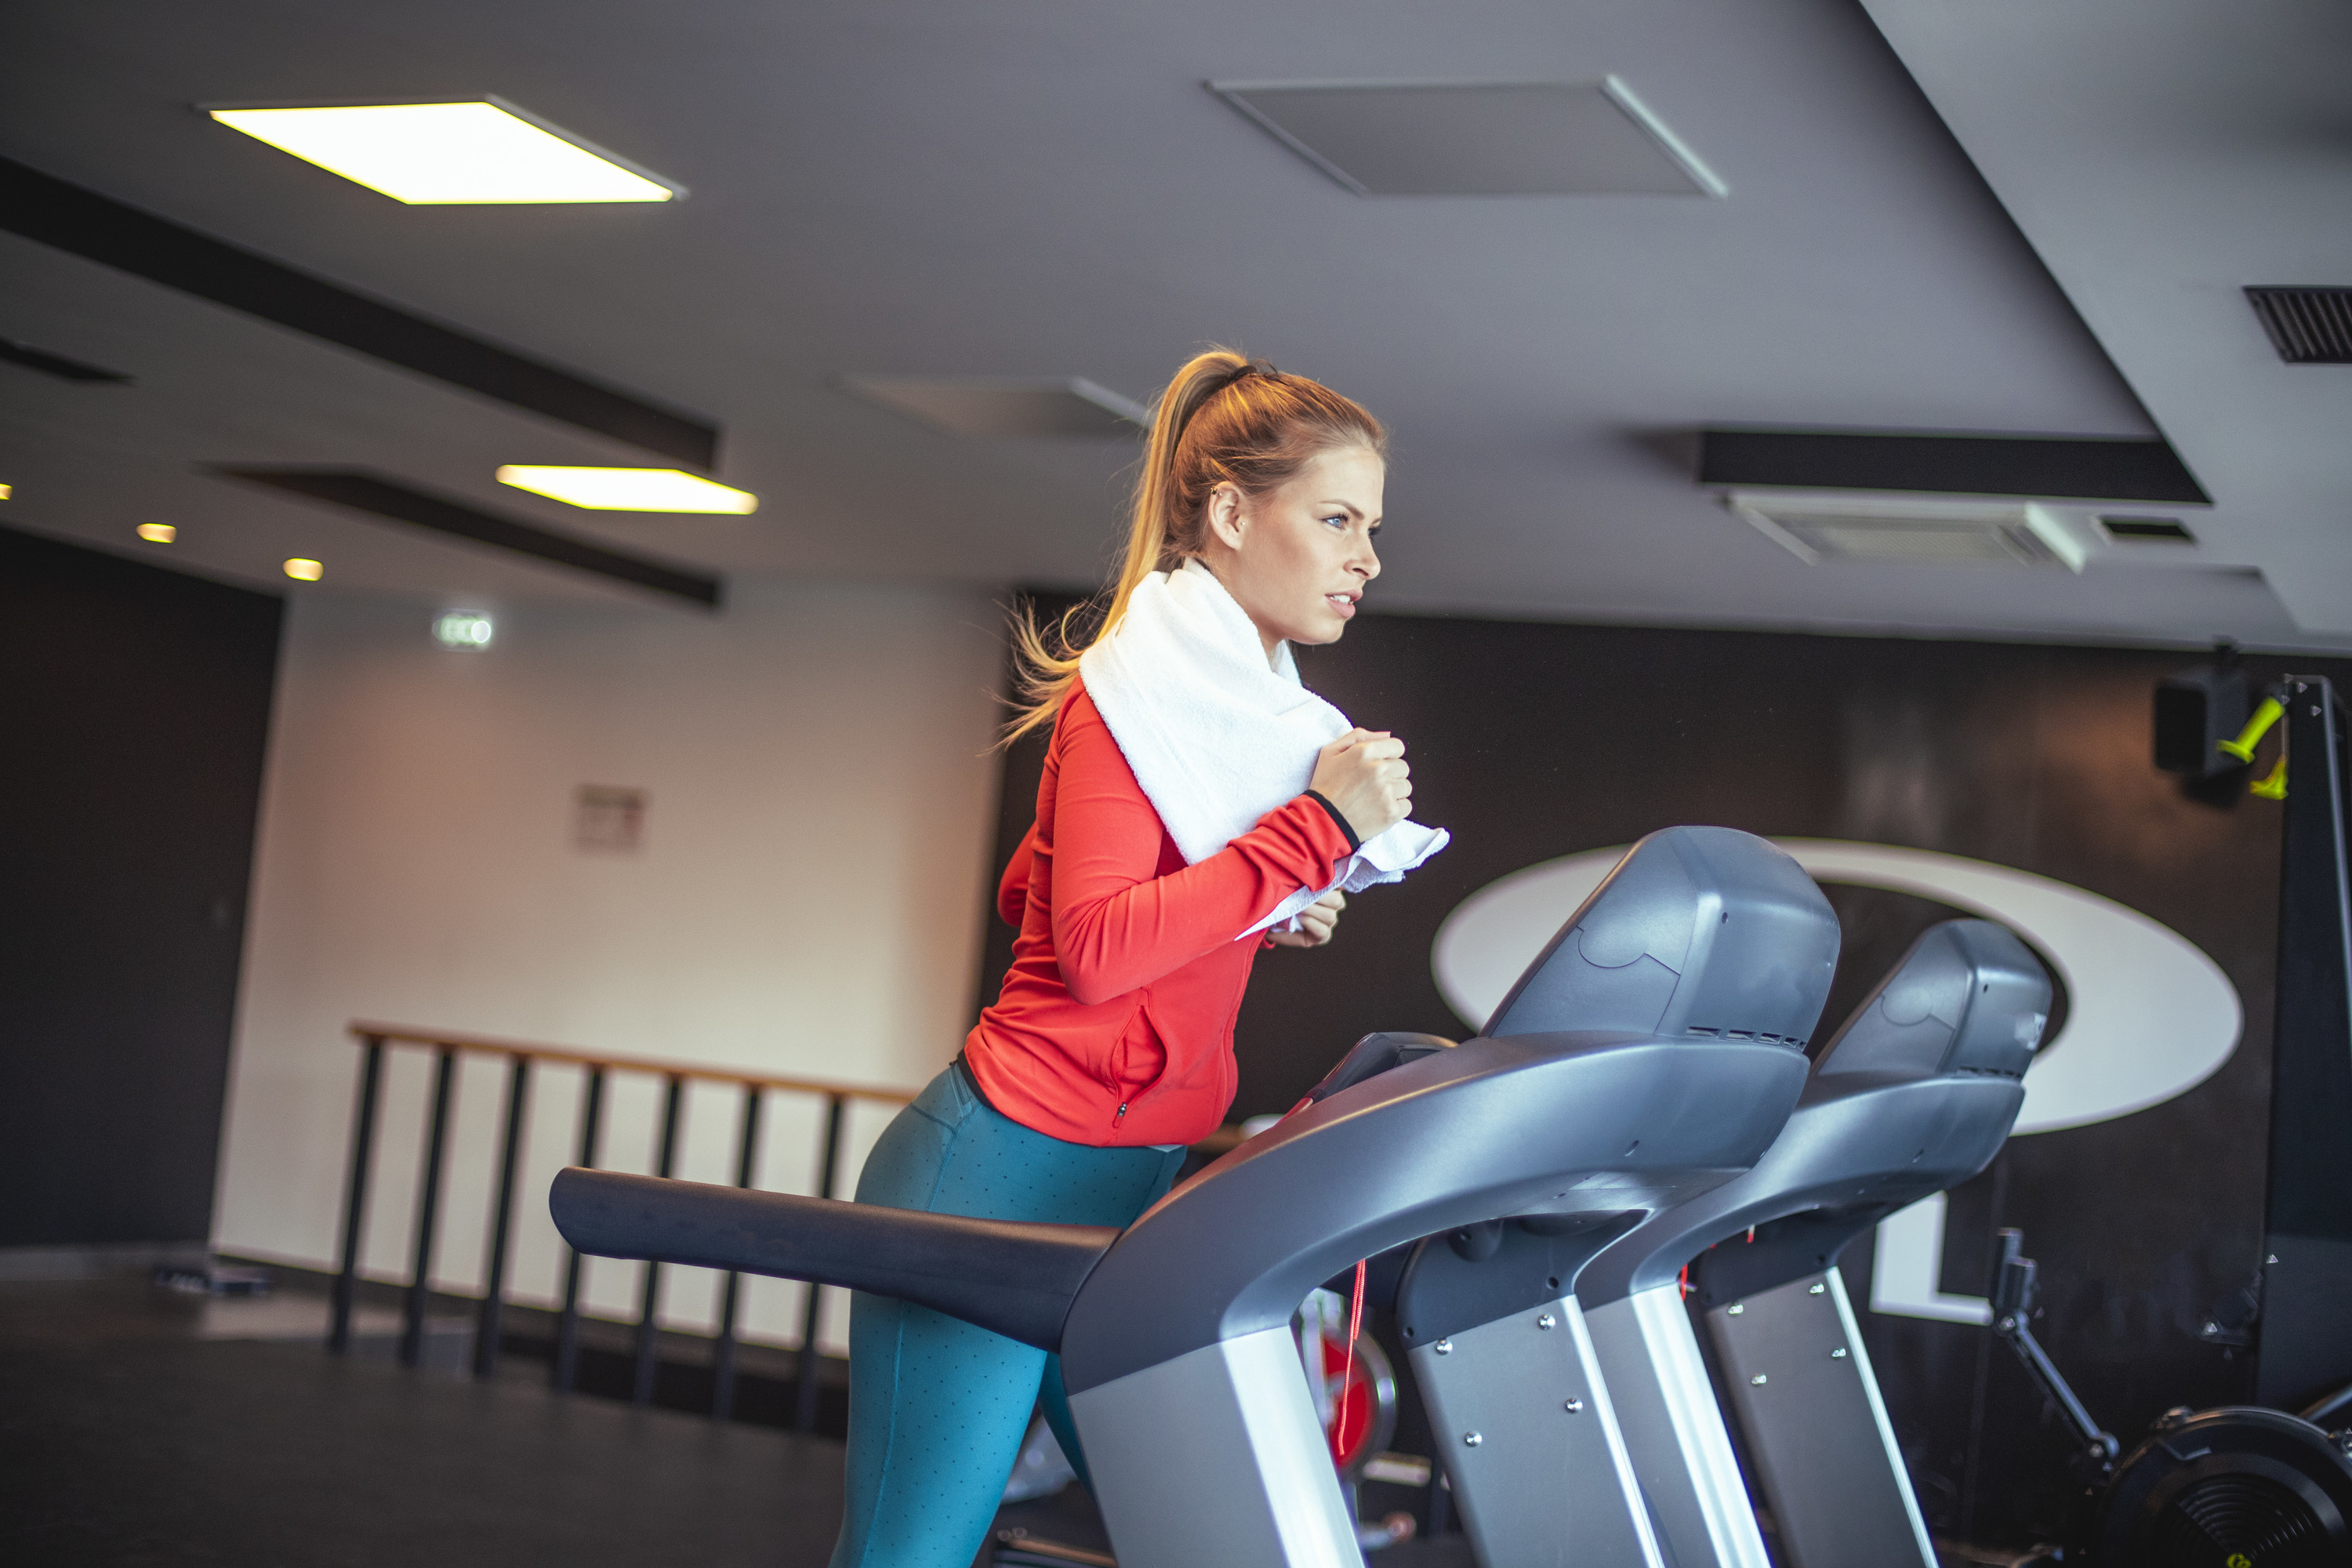 A woman on the treadmill